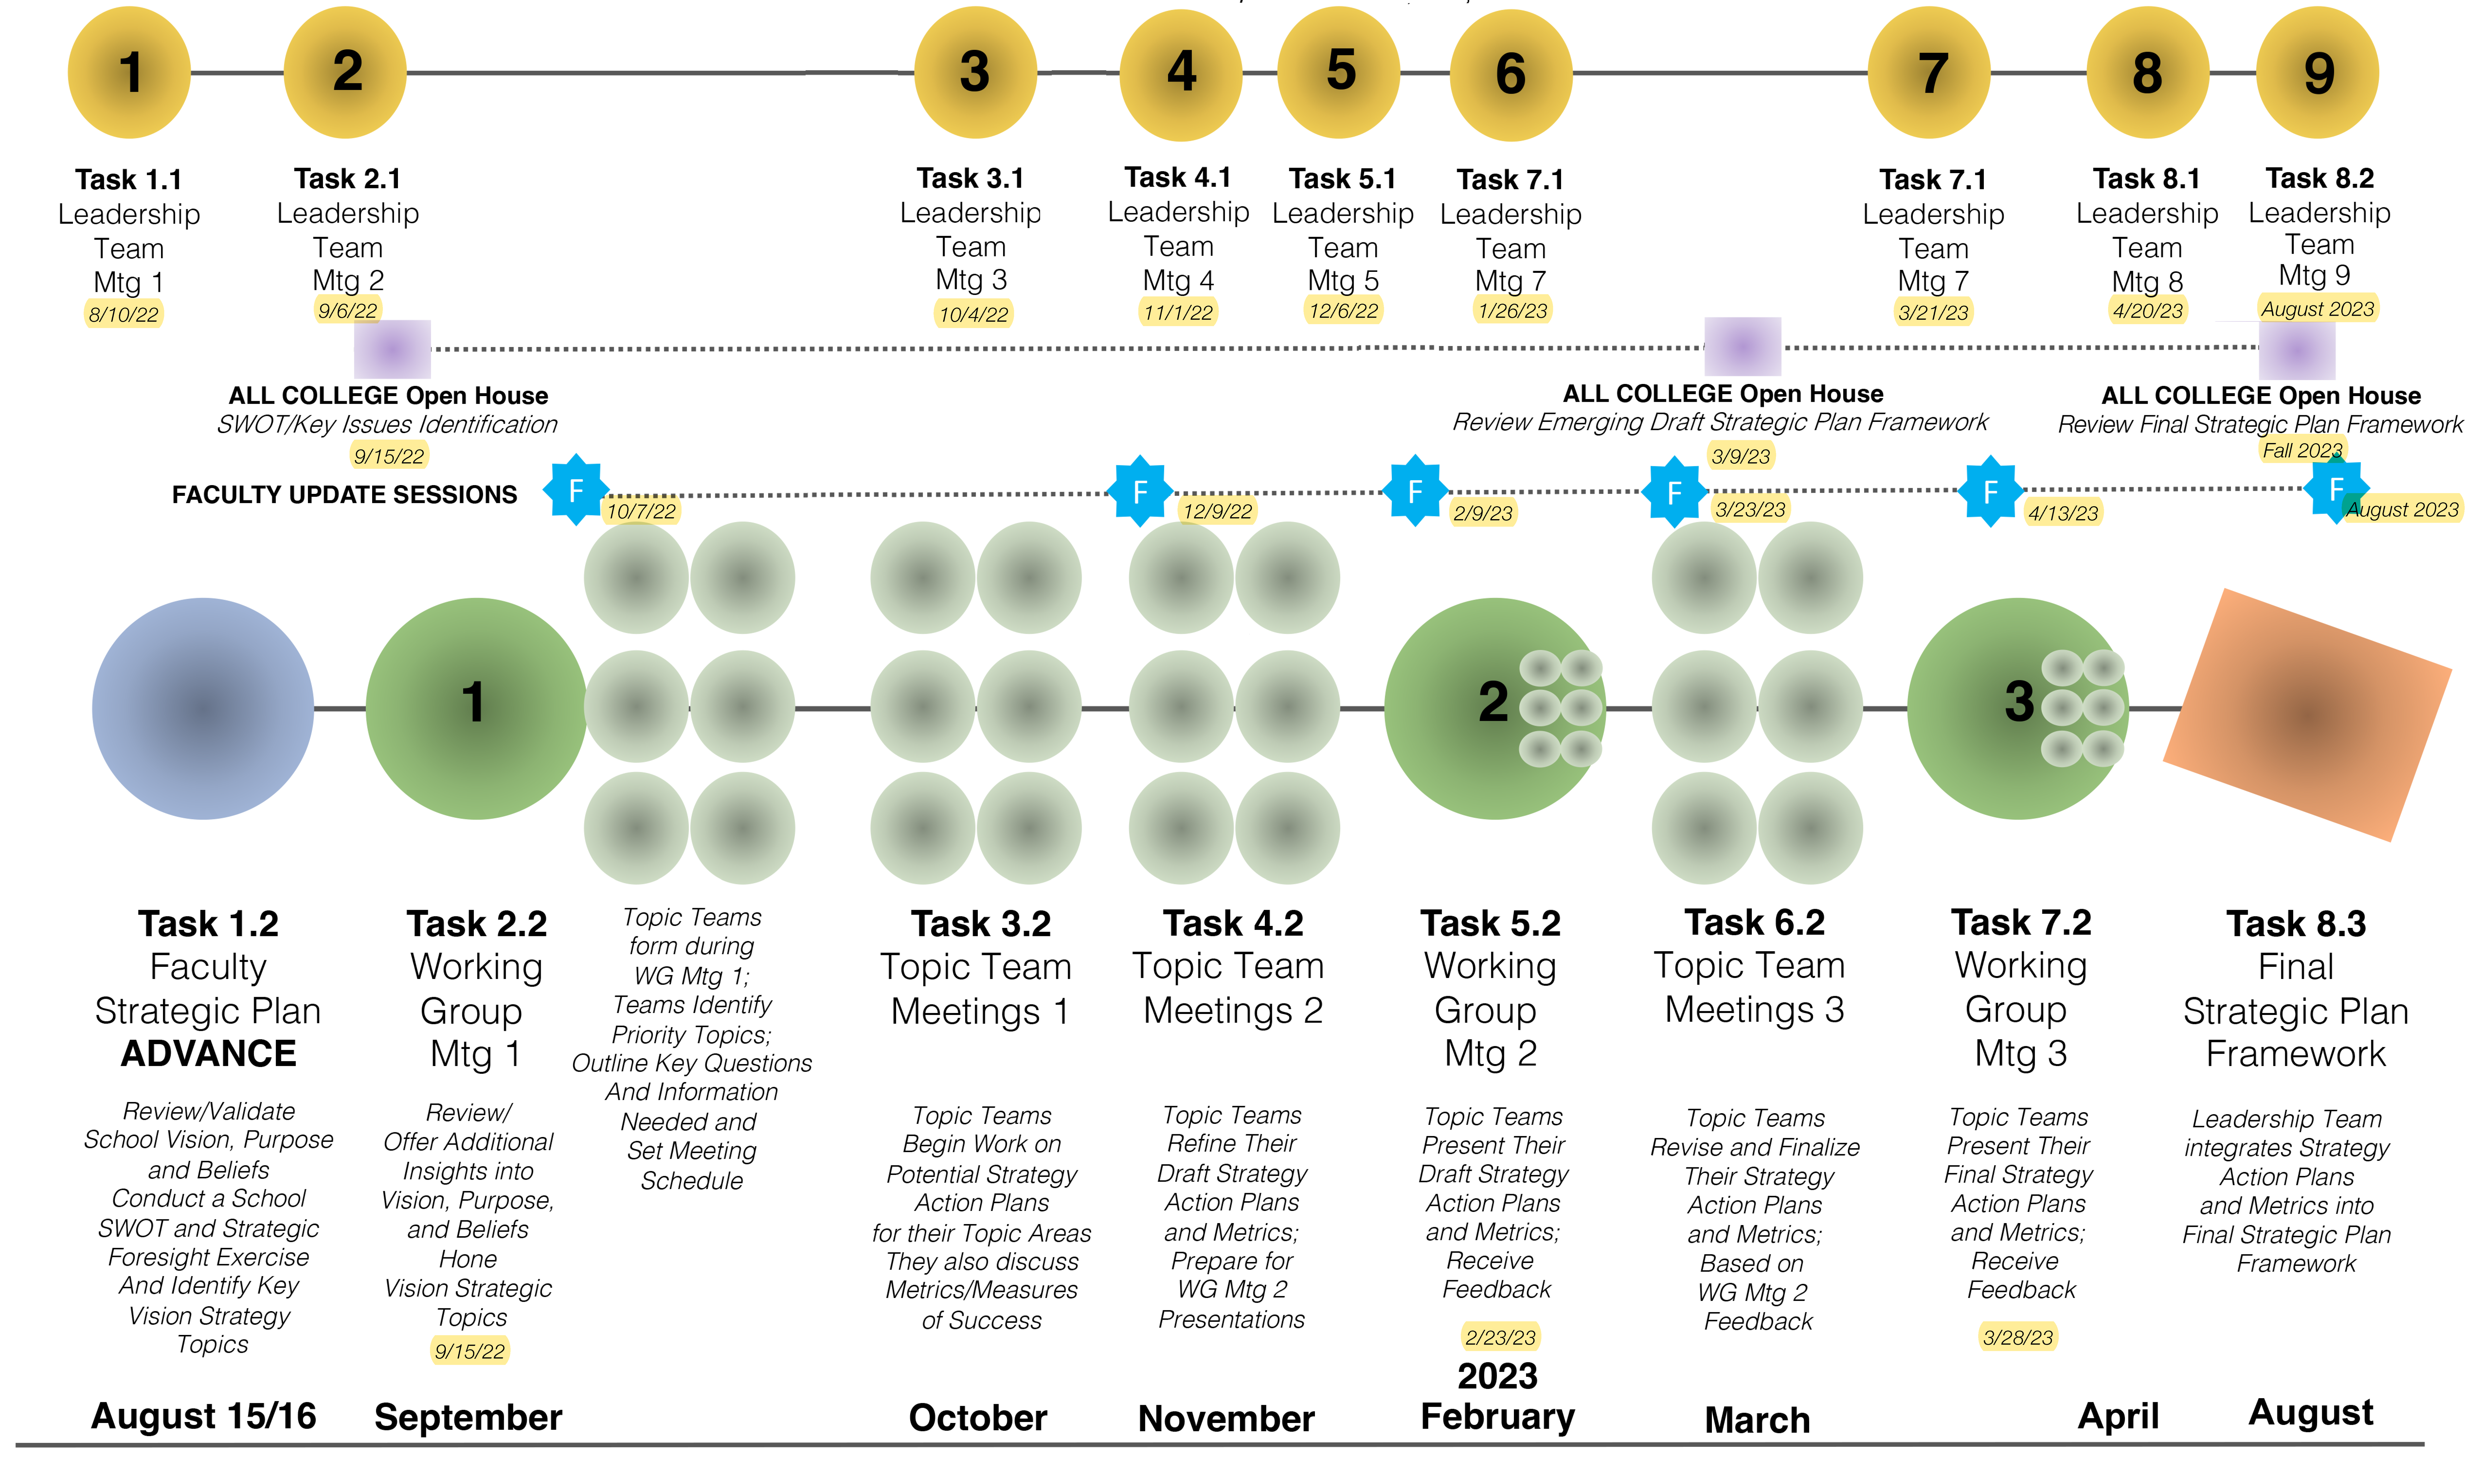 Strategic Planning Process Timeline